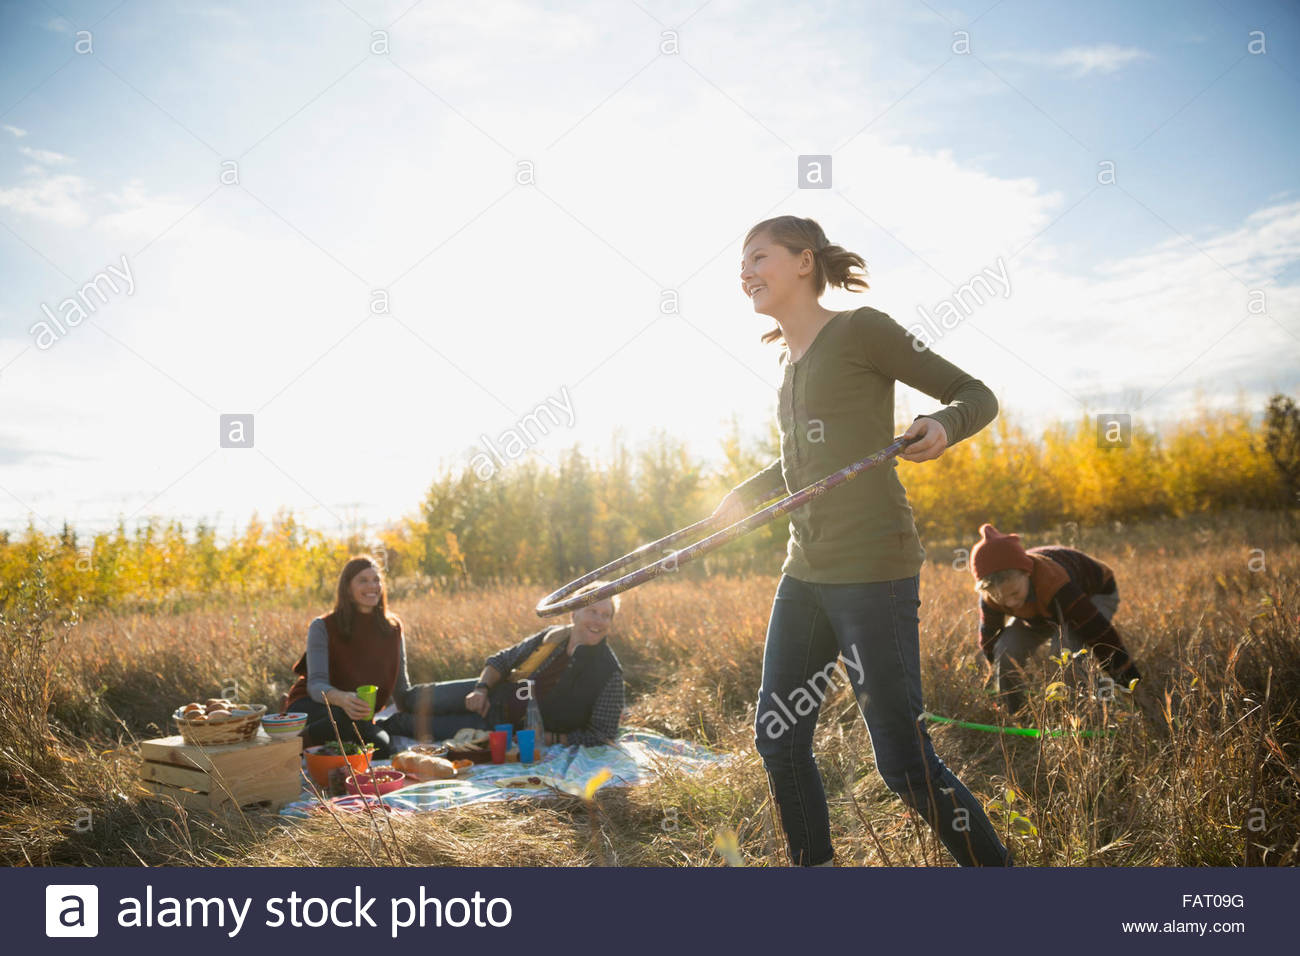 Family enjoying picnic spinning in plastic hoops Stock Photo